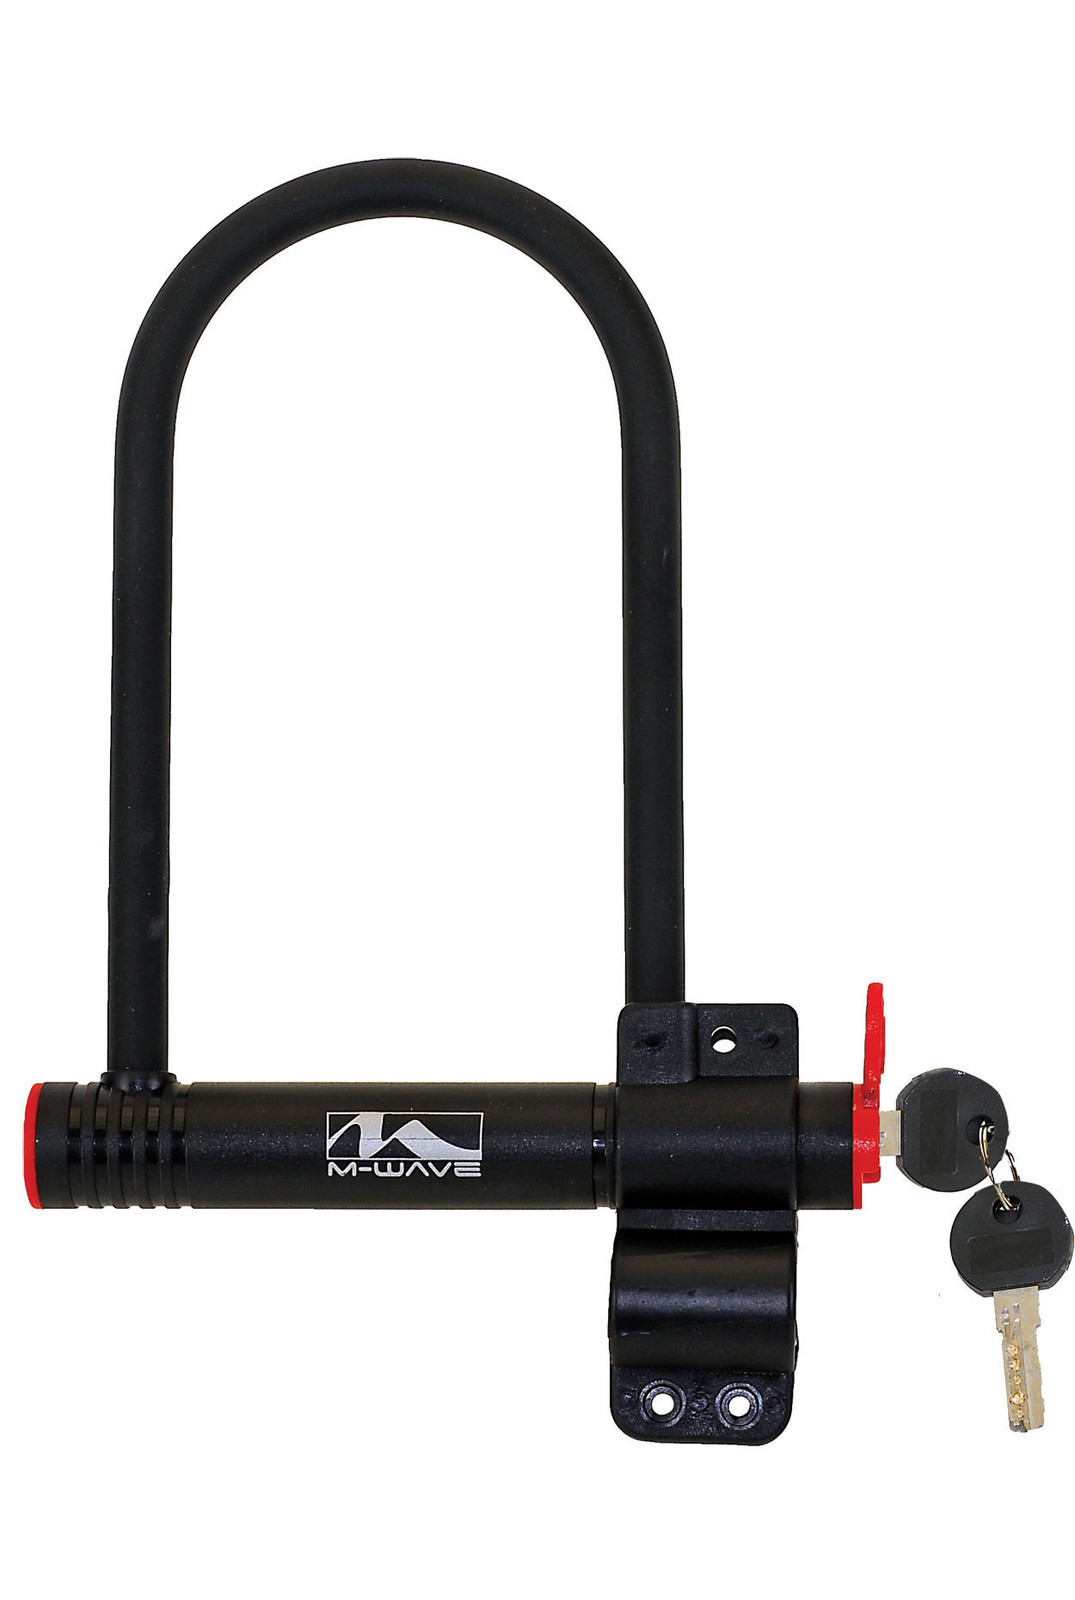  M-Wave Bike Bicycle U Lock Shackle 13MM Key 180mm X 245mm   M-Wave Bike Bicycle U Lock Shackle 13MM Key 180mm X 245mm 